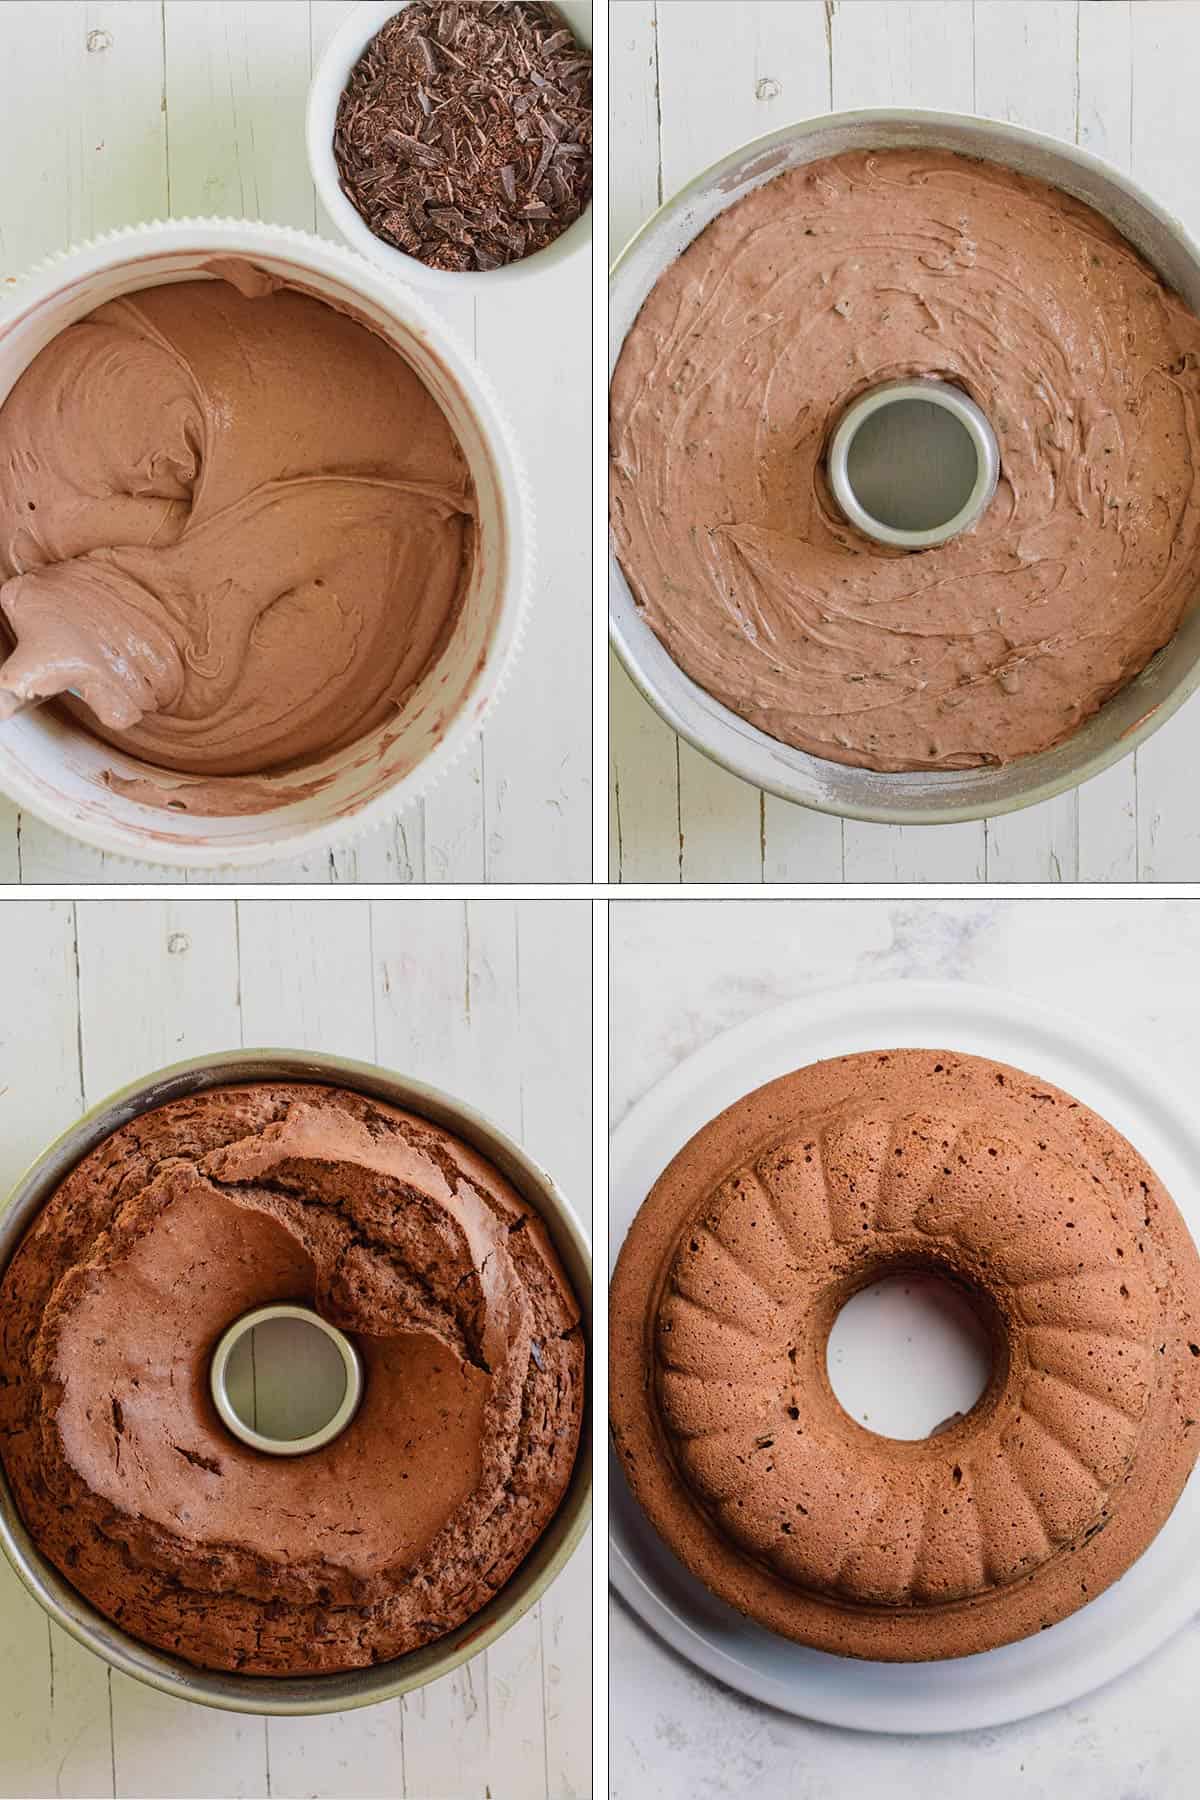 How To Make Chocolate Wine Cake